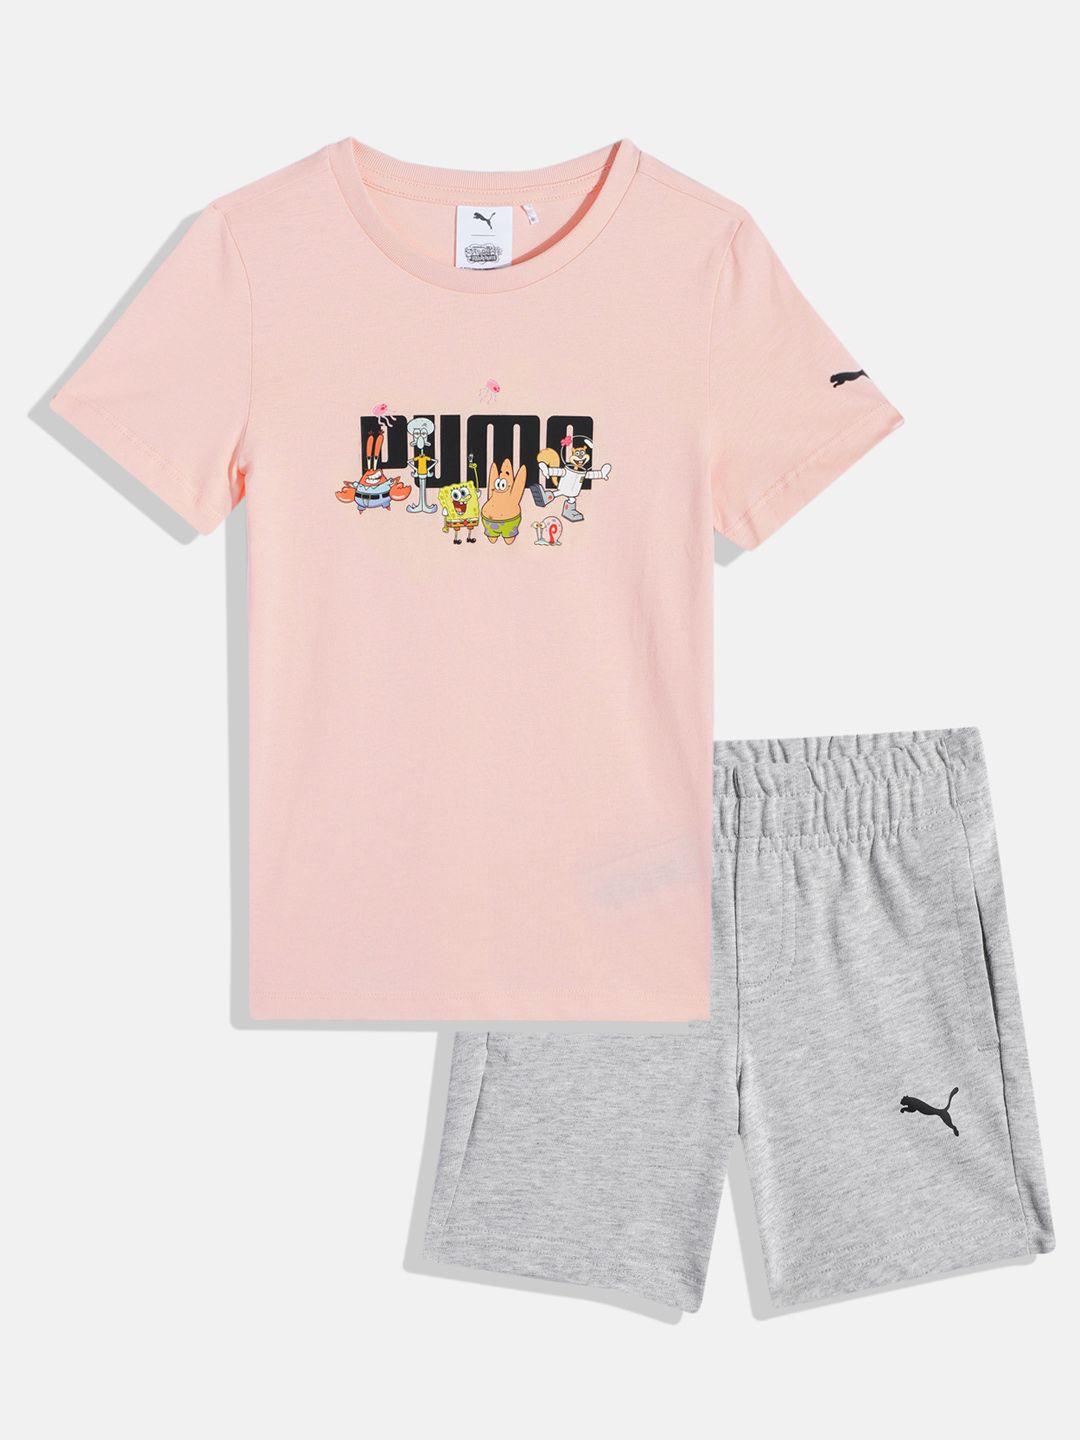 puma x spongebob kids brand logo printed pure cotton t-shirt with shorts